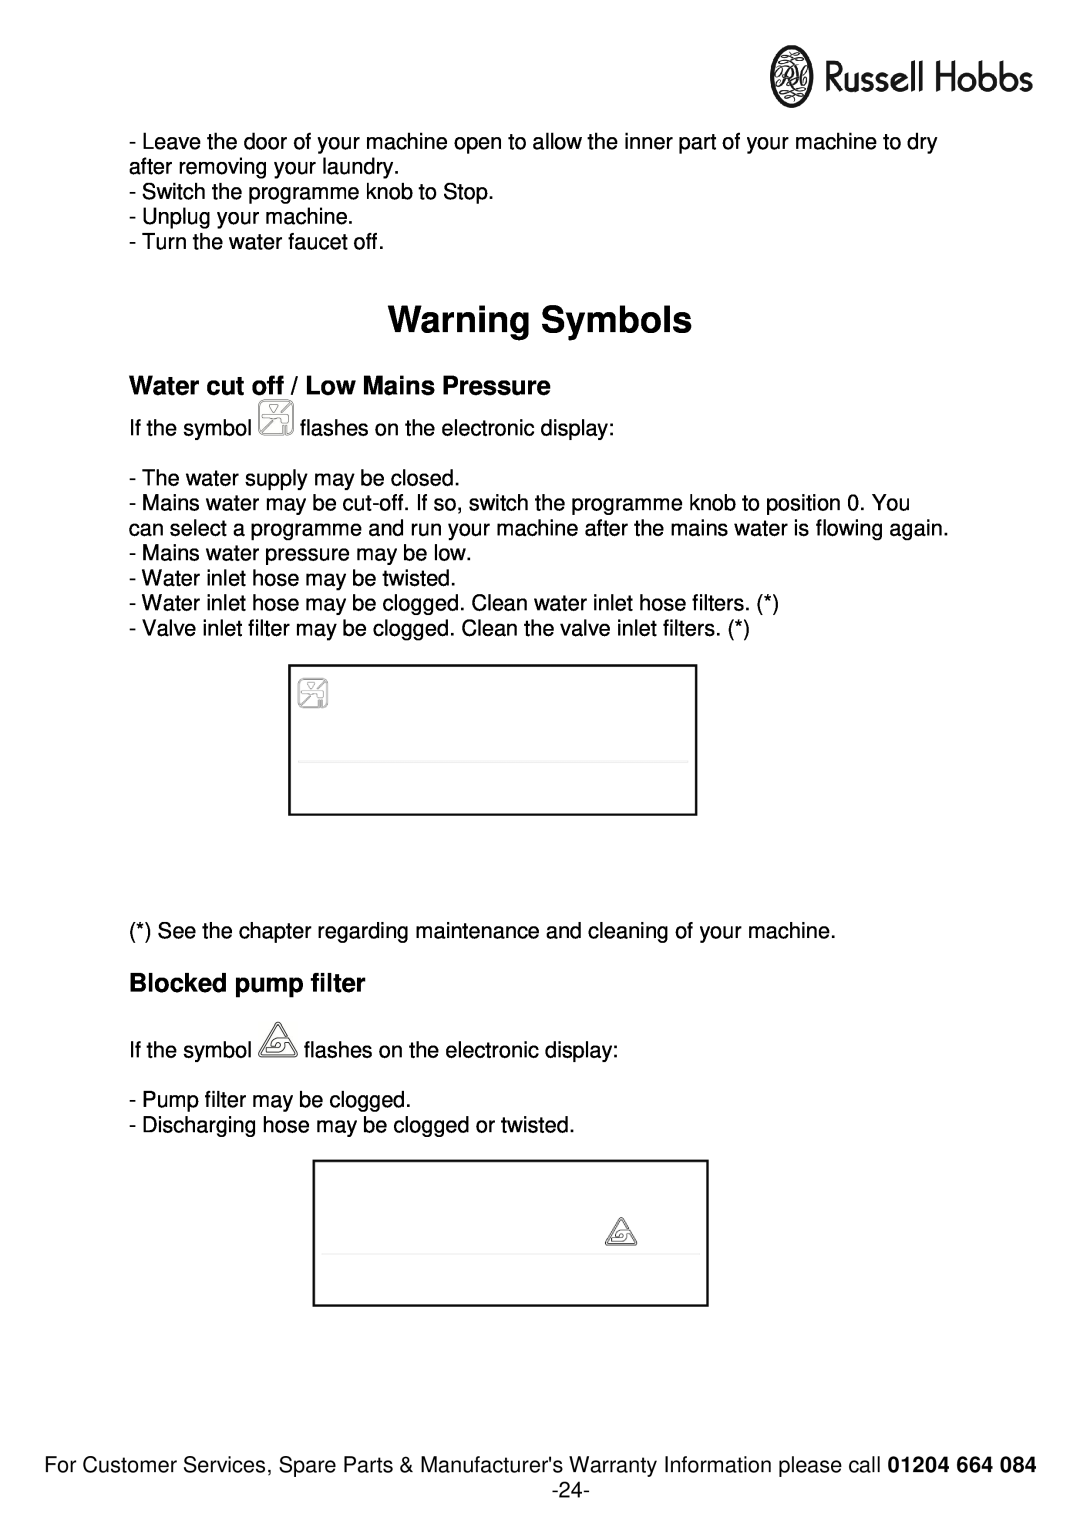 Russell Hobbs RH1261TW instruction manual Warning Symbols, Water cut off / Low Mains Pressure, Blocked pump filter 